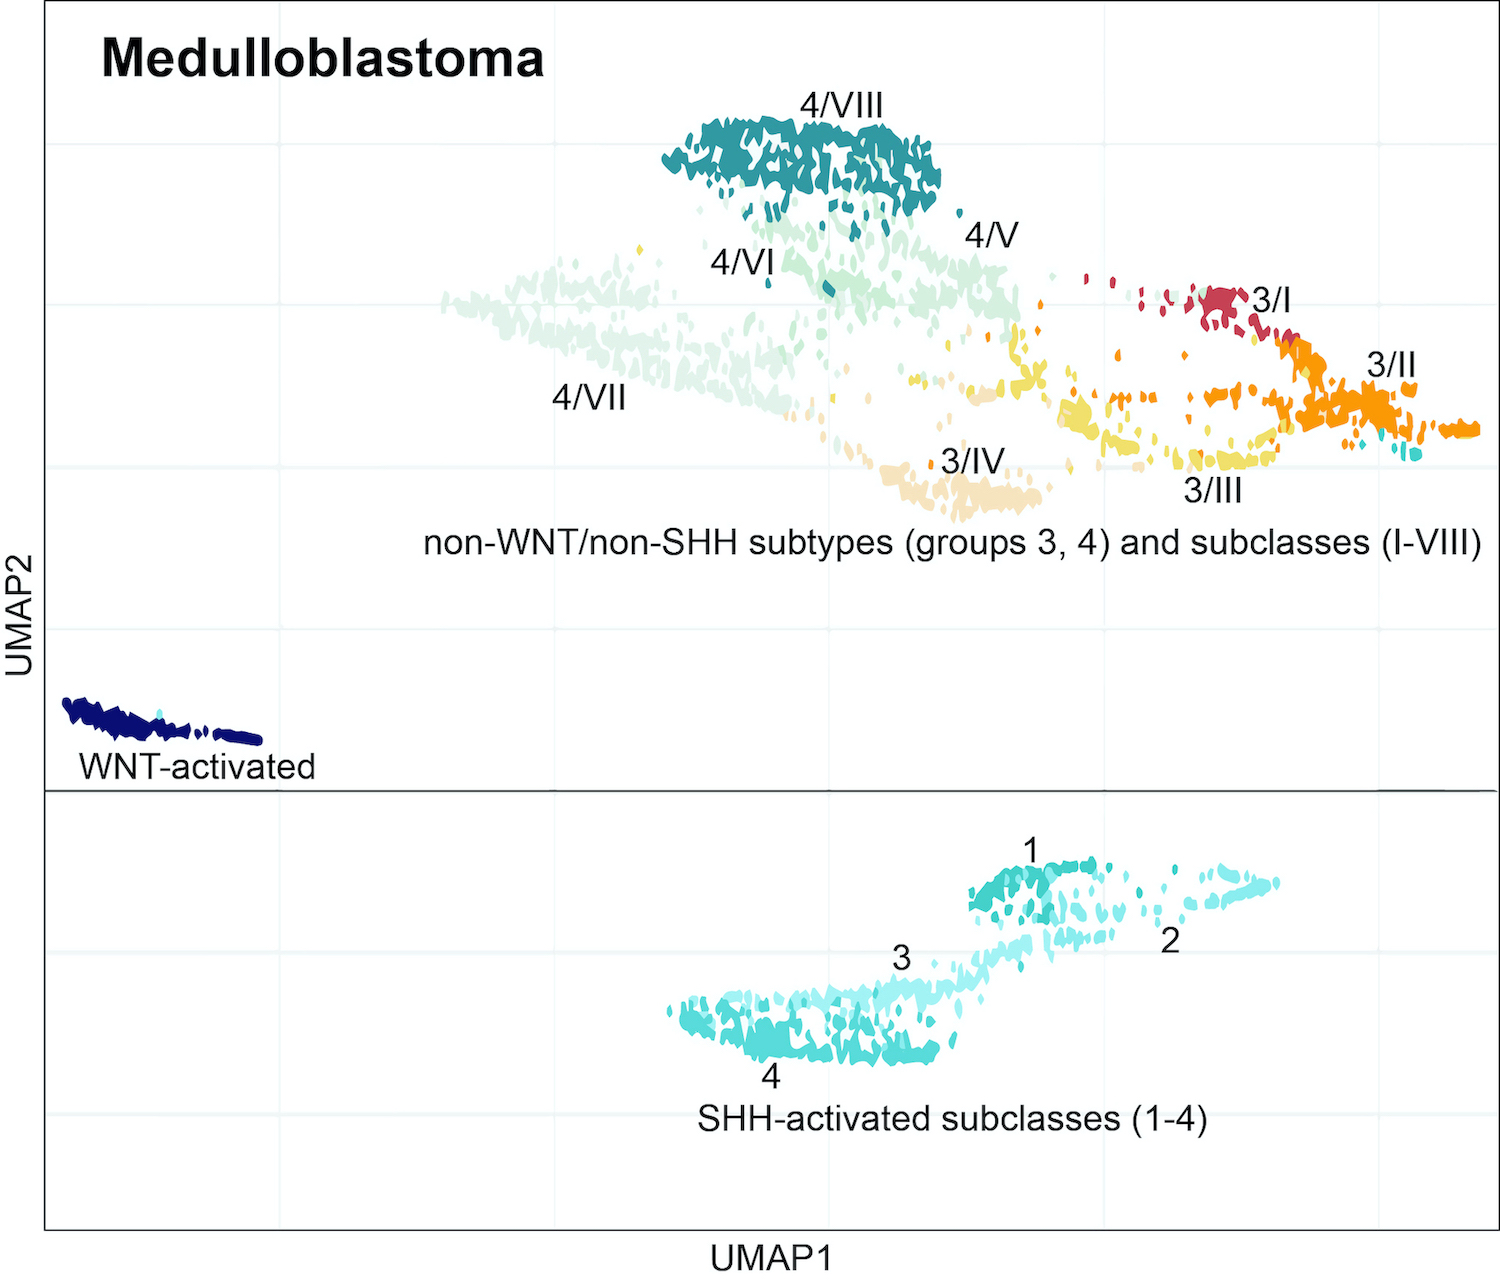 Dimensionality reduction of medulloblastoma